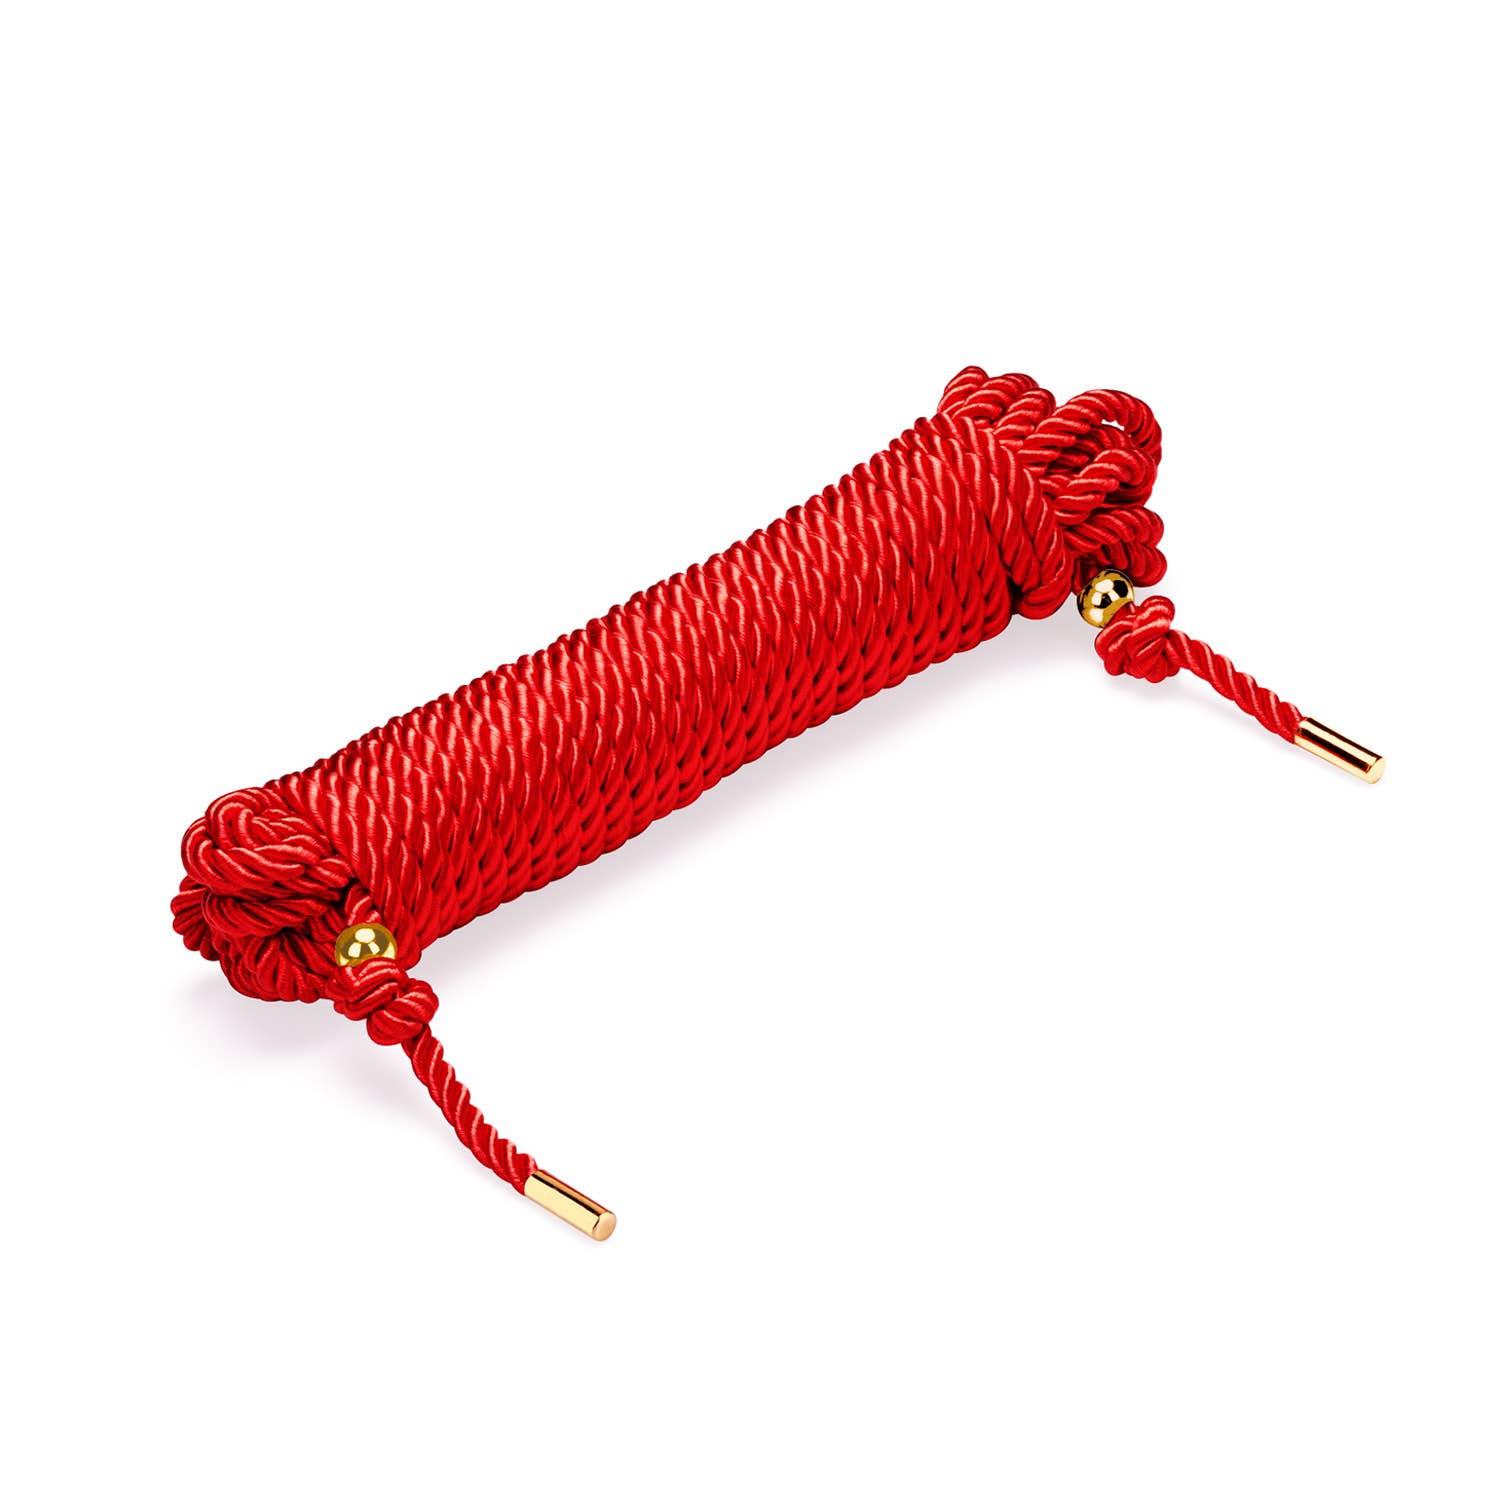 Red Shibari Bondage Rope Silky Cotton Rope 10m